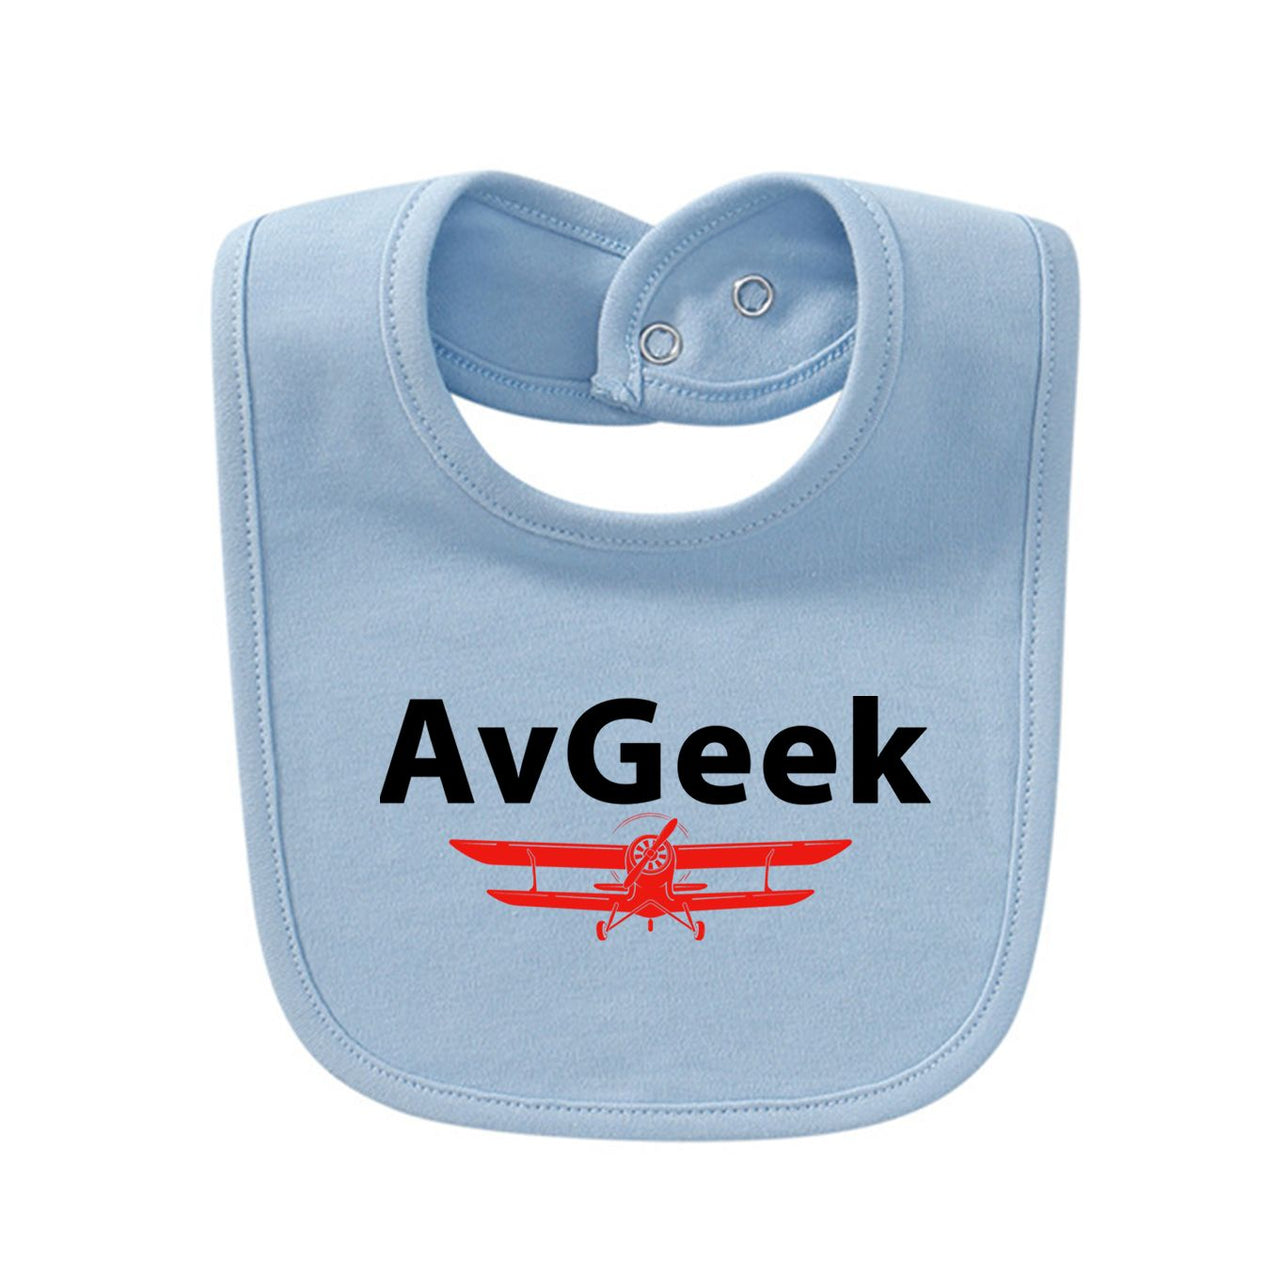 Avgeek Designed Baby Saliva & Feeding Towels